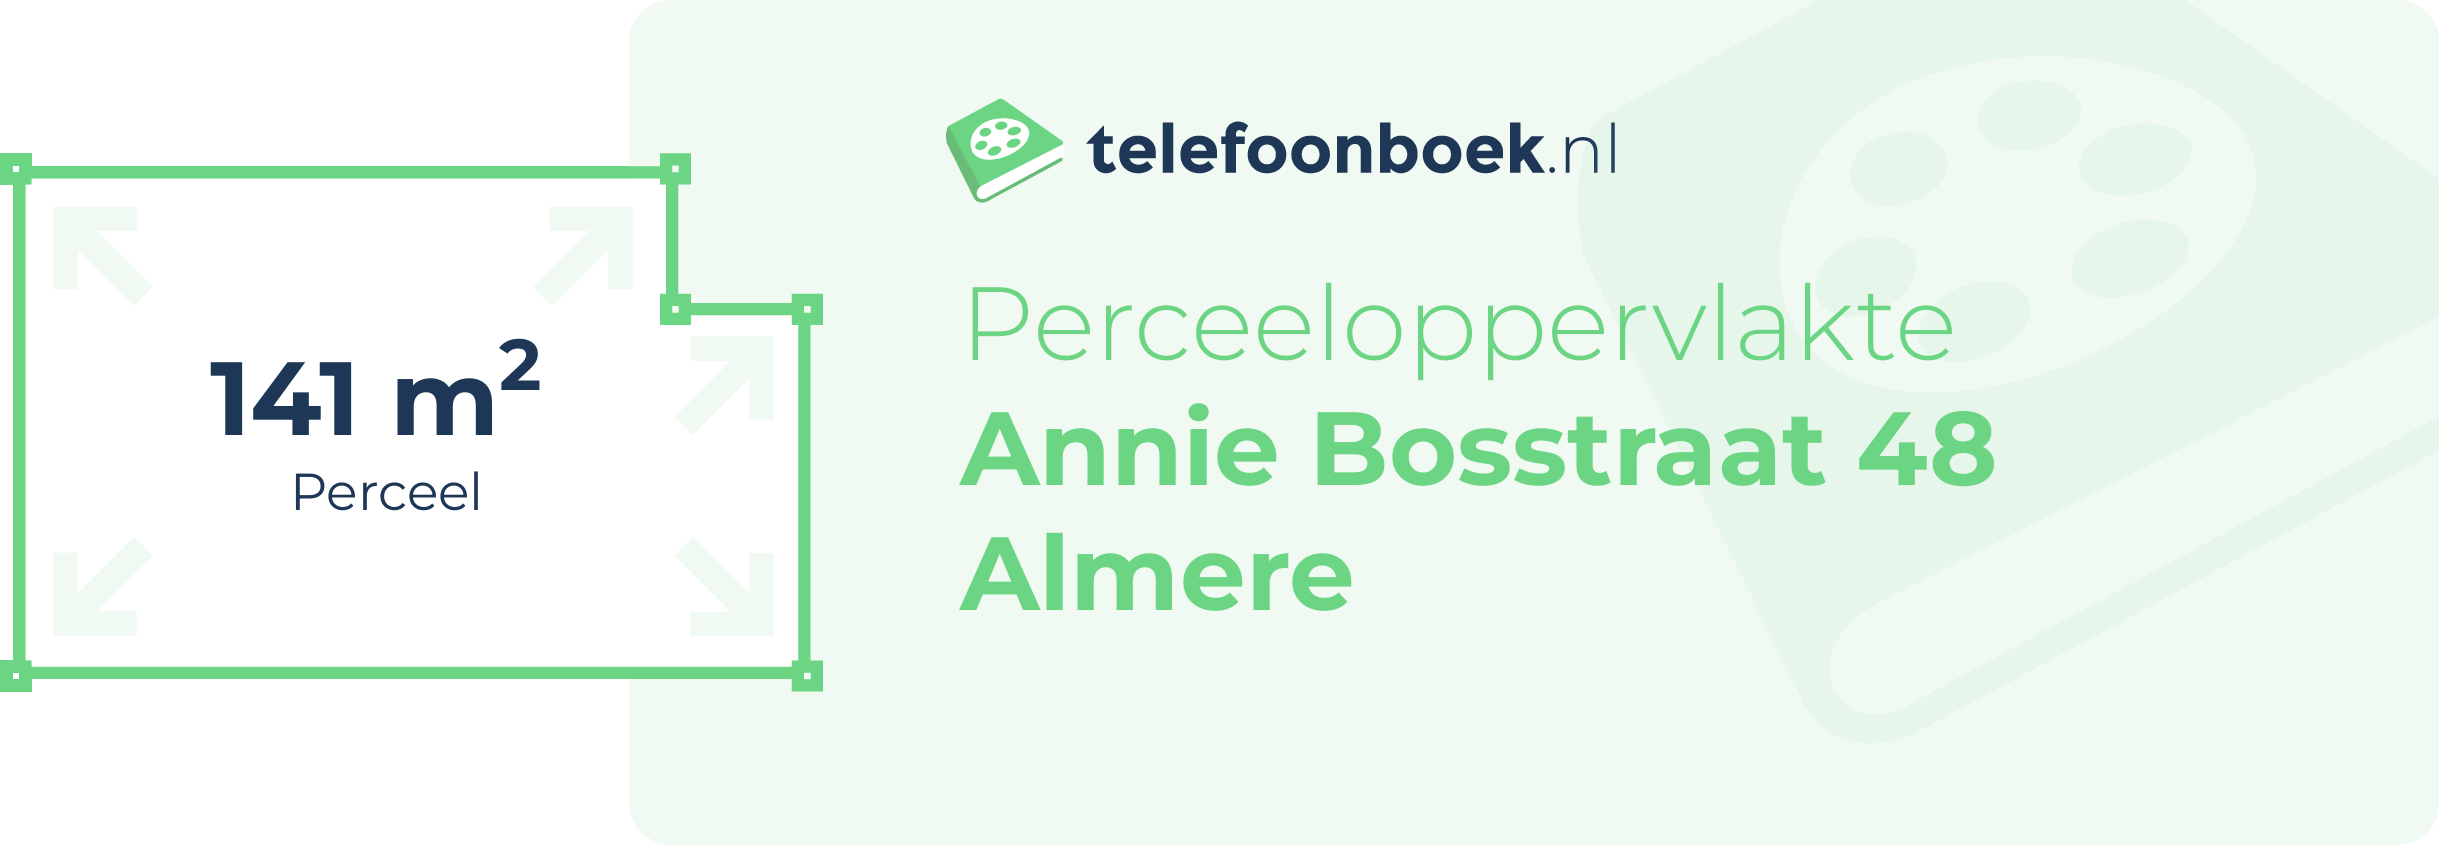 Perceeloppervlakte Annie Bosstraat 48 Almere